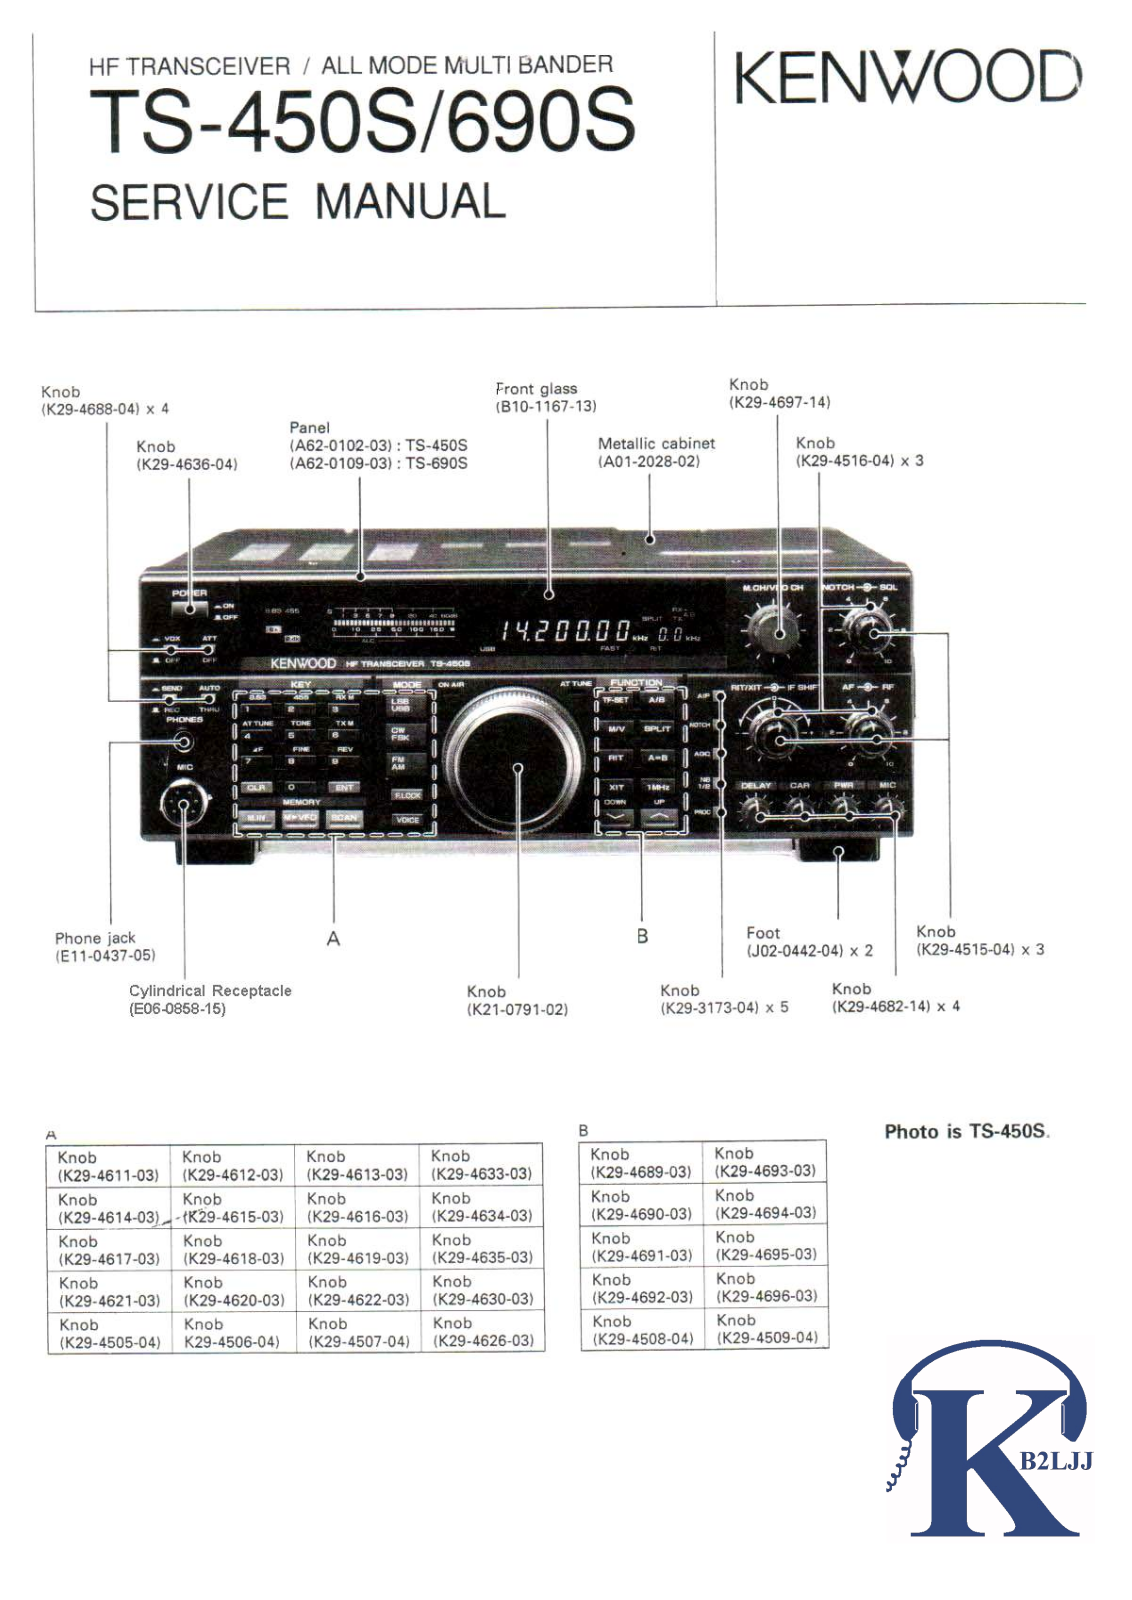 Kenwood TS-450S Service Manual